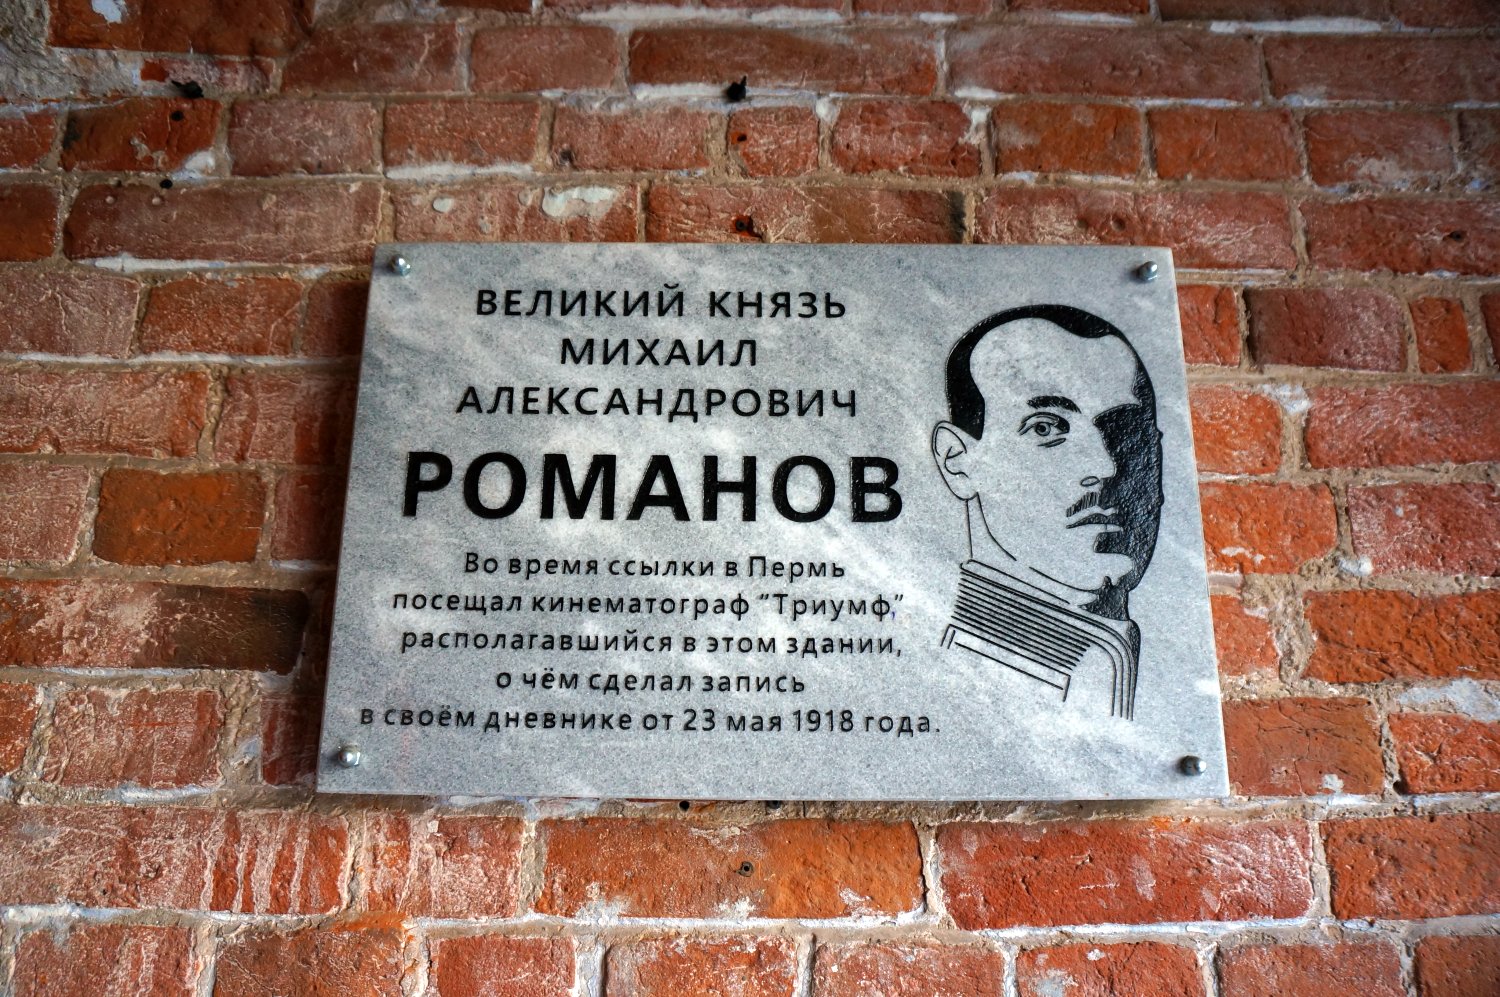 Perm, Улица Ленина, 44. Perm — Memorial plaques